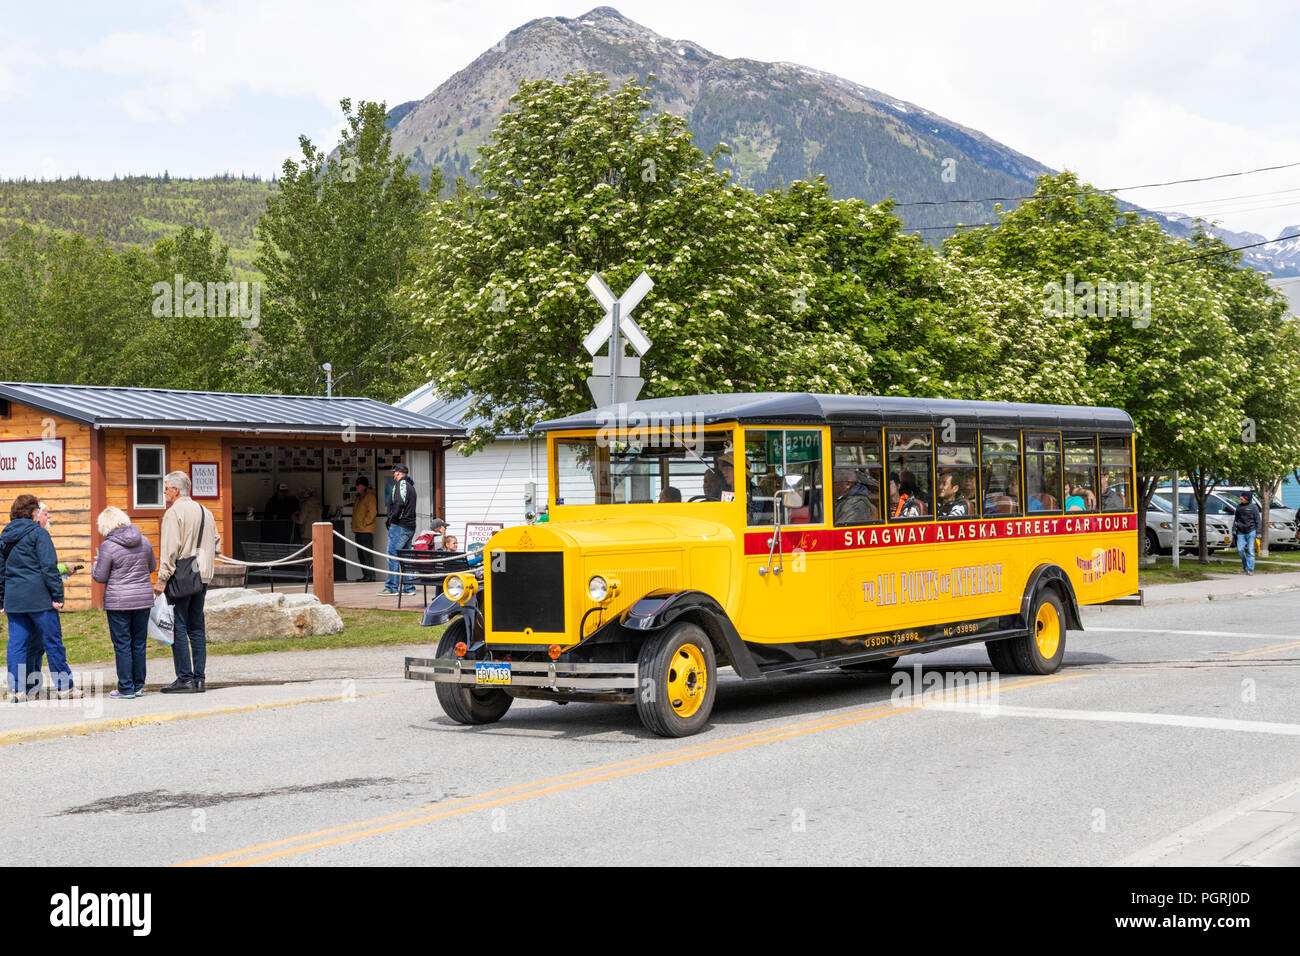 The yellow Skagway Alaska Street Car Tour bus in Skagway, Alaska, USA Stock Photo